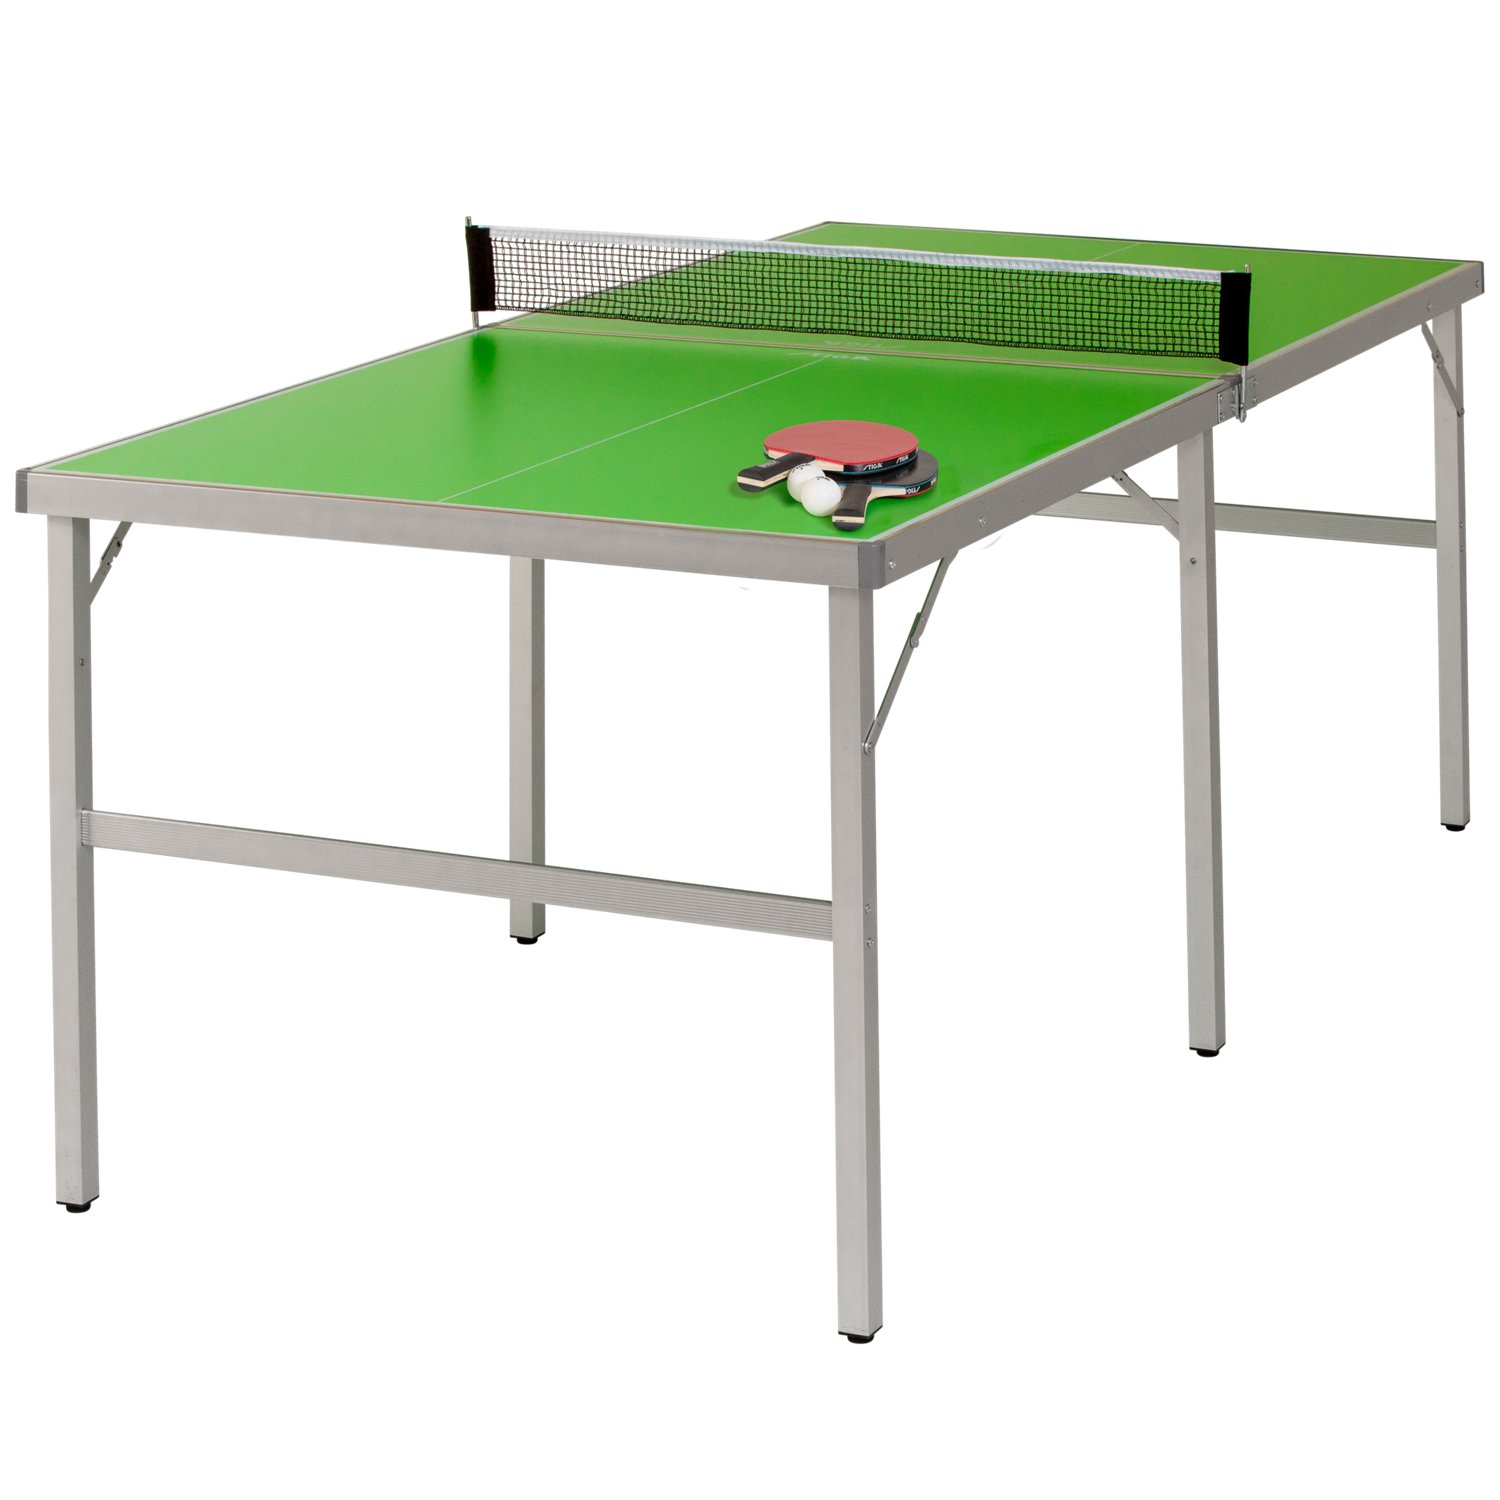 Table Tennis Tables - Sam's Club